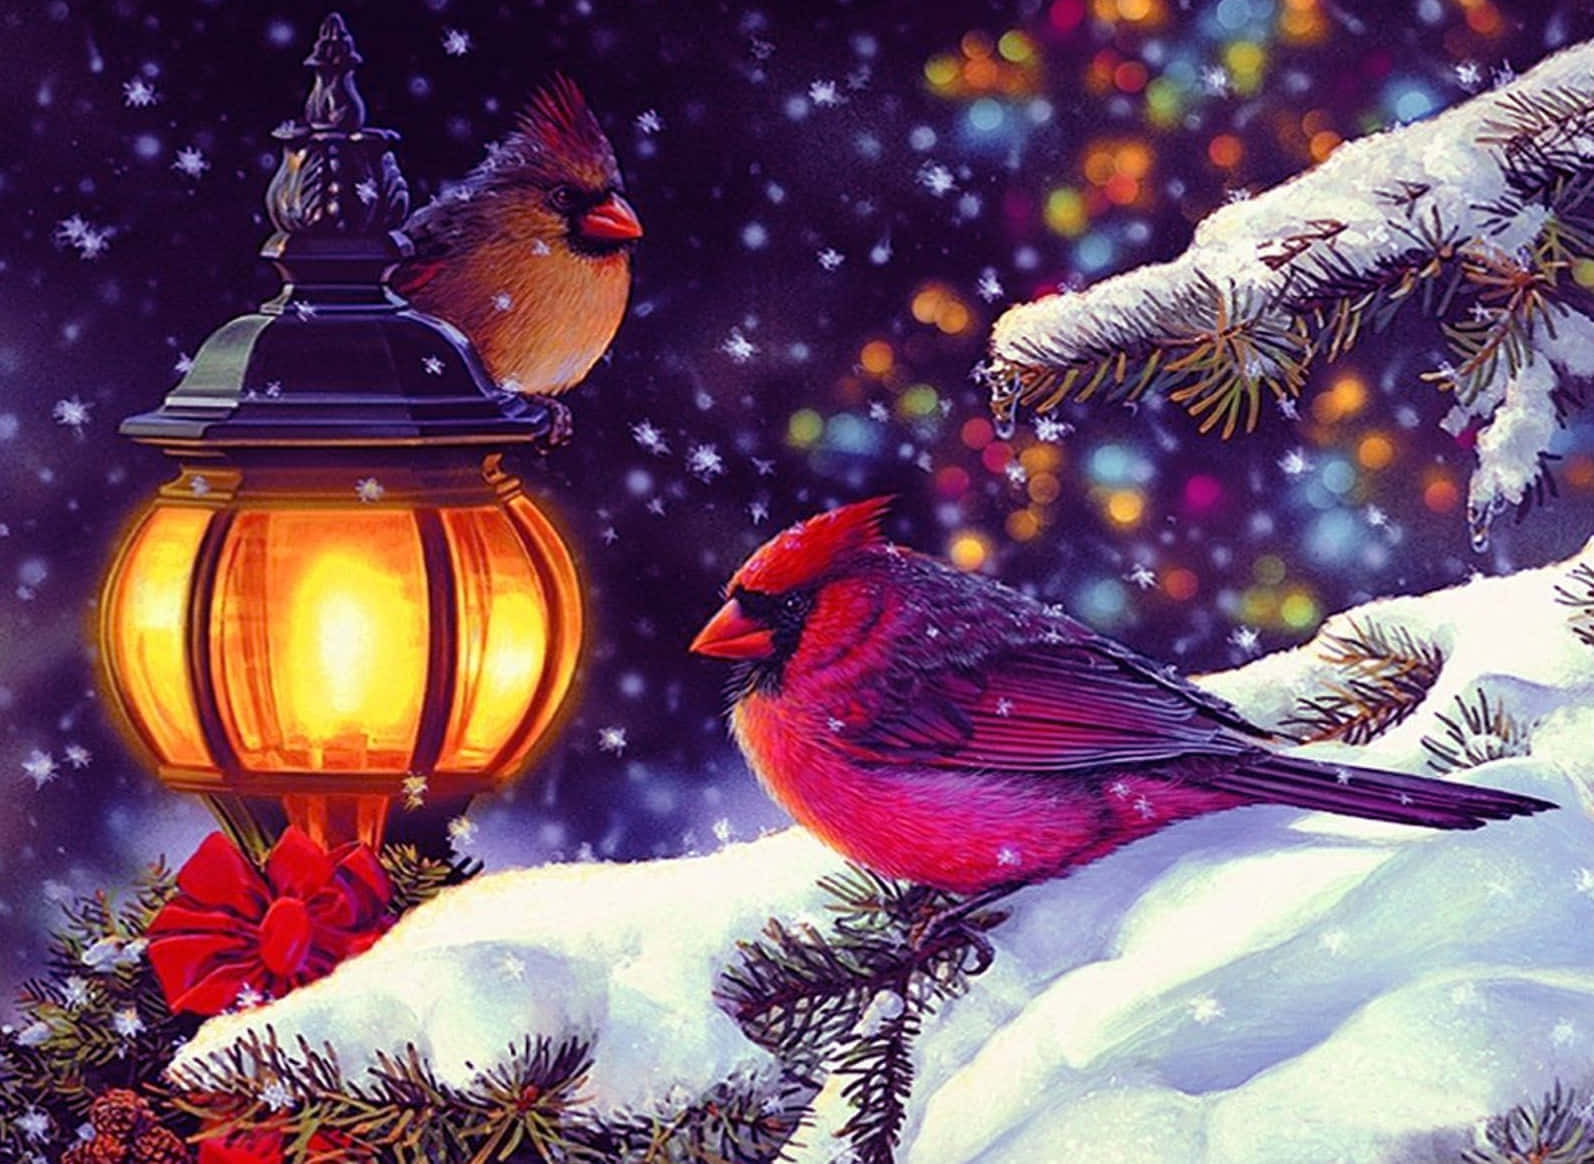 Winter Holiday Desktop With Two Cardinal Birds Wallpaper